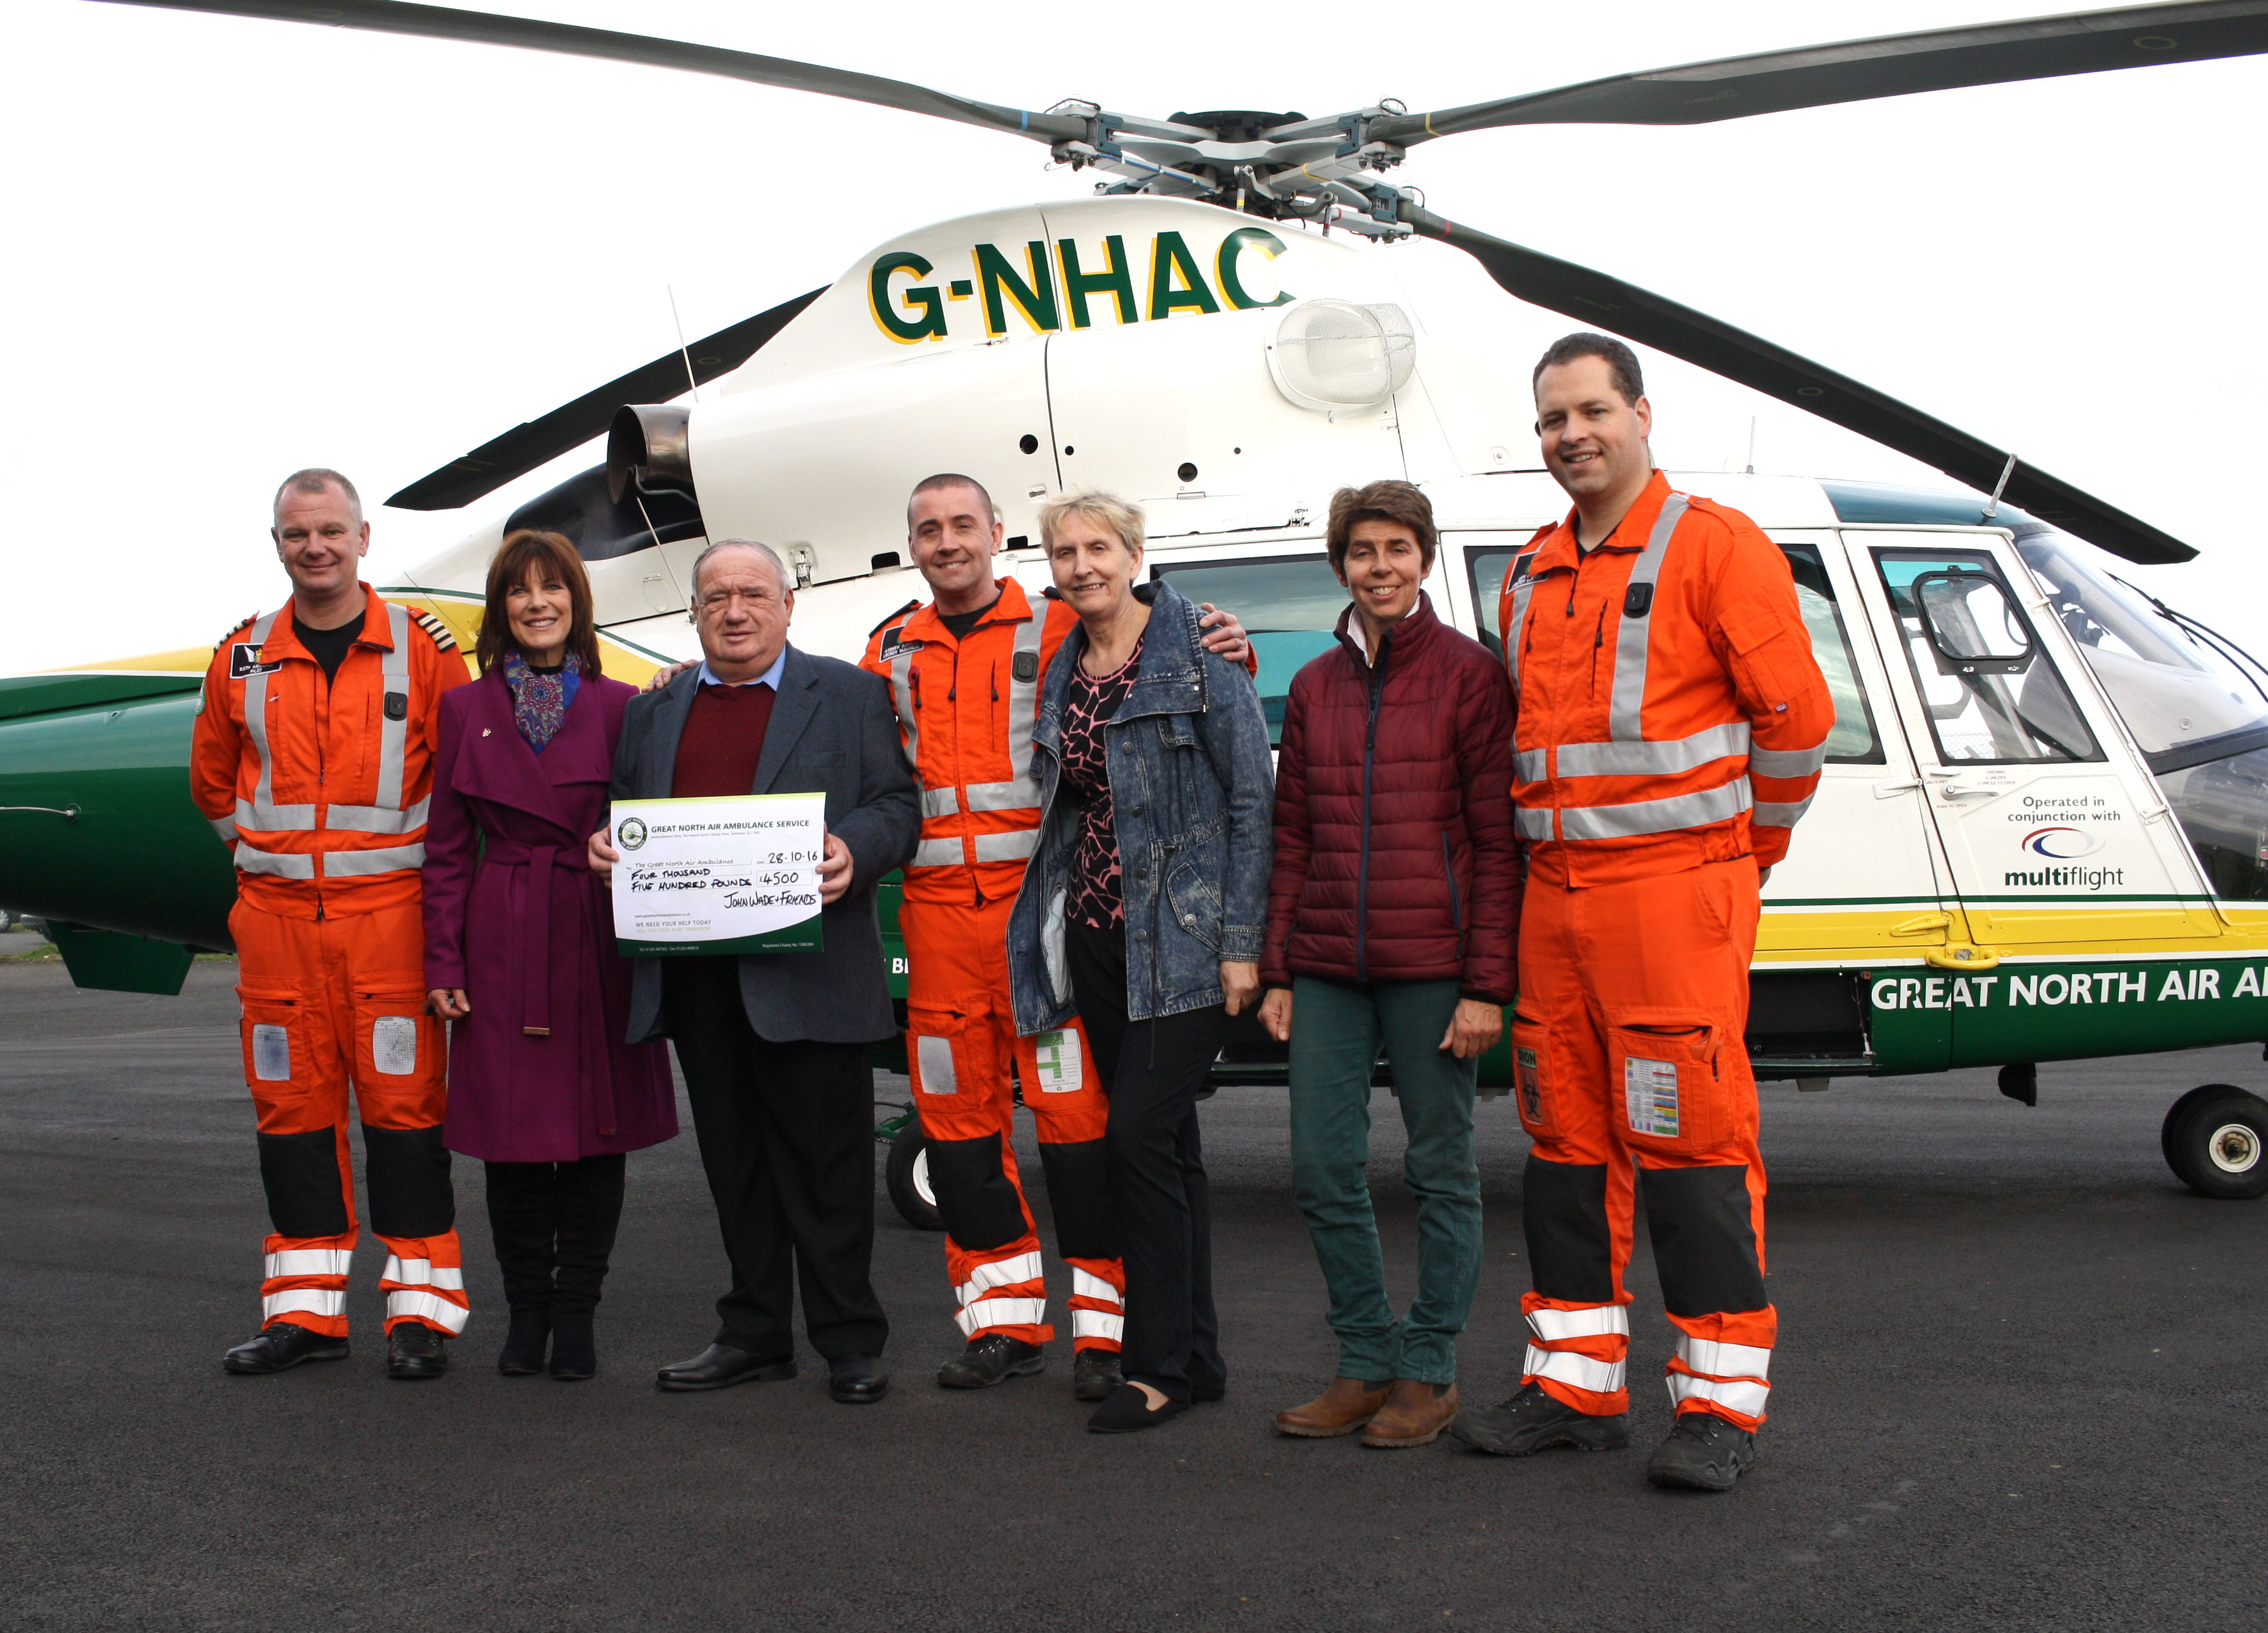 Aycliffe Businessman Raises £4,500 for Air Ambulance